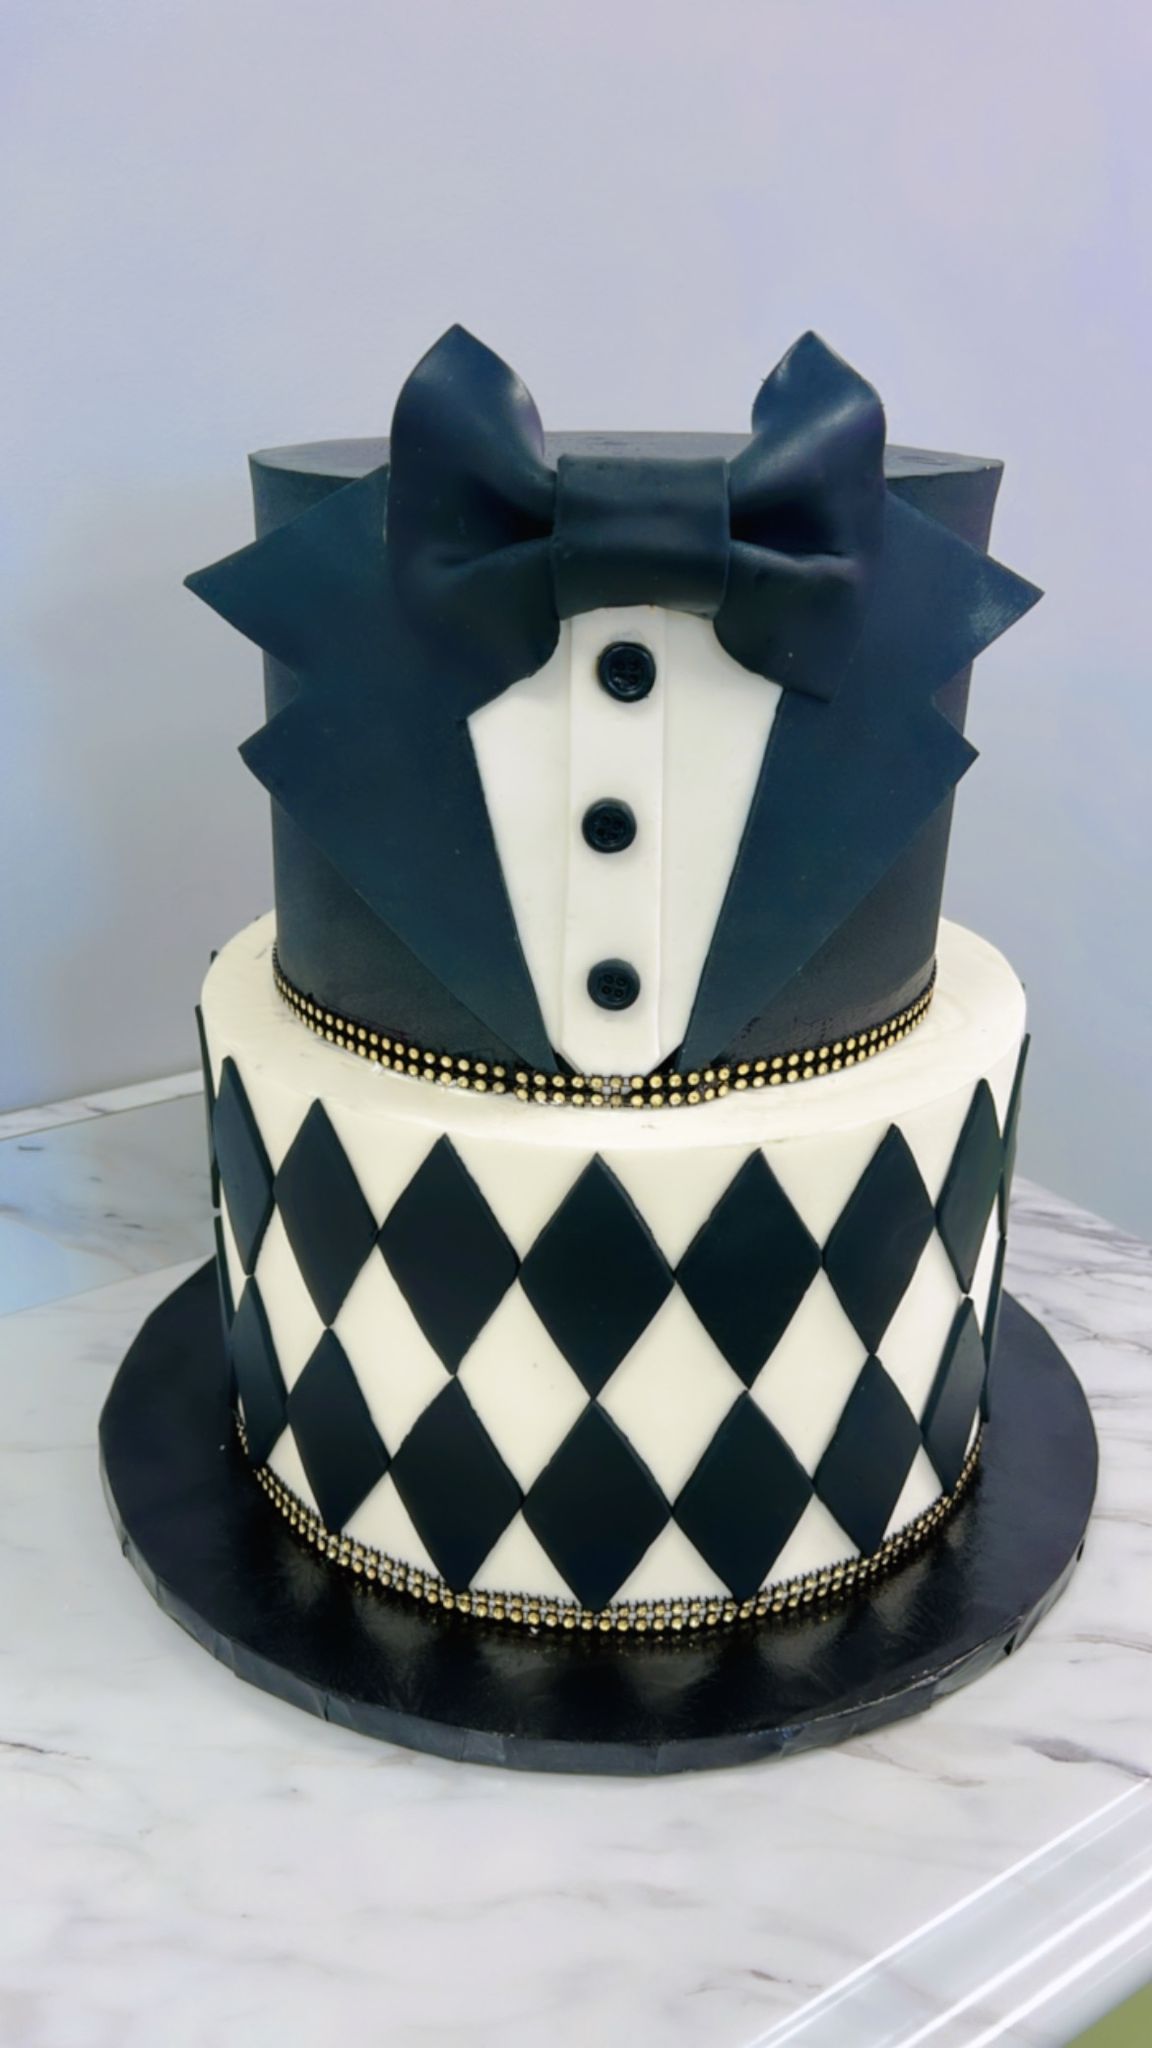 Suit and tie - Splendid Cake Store